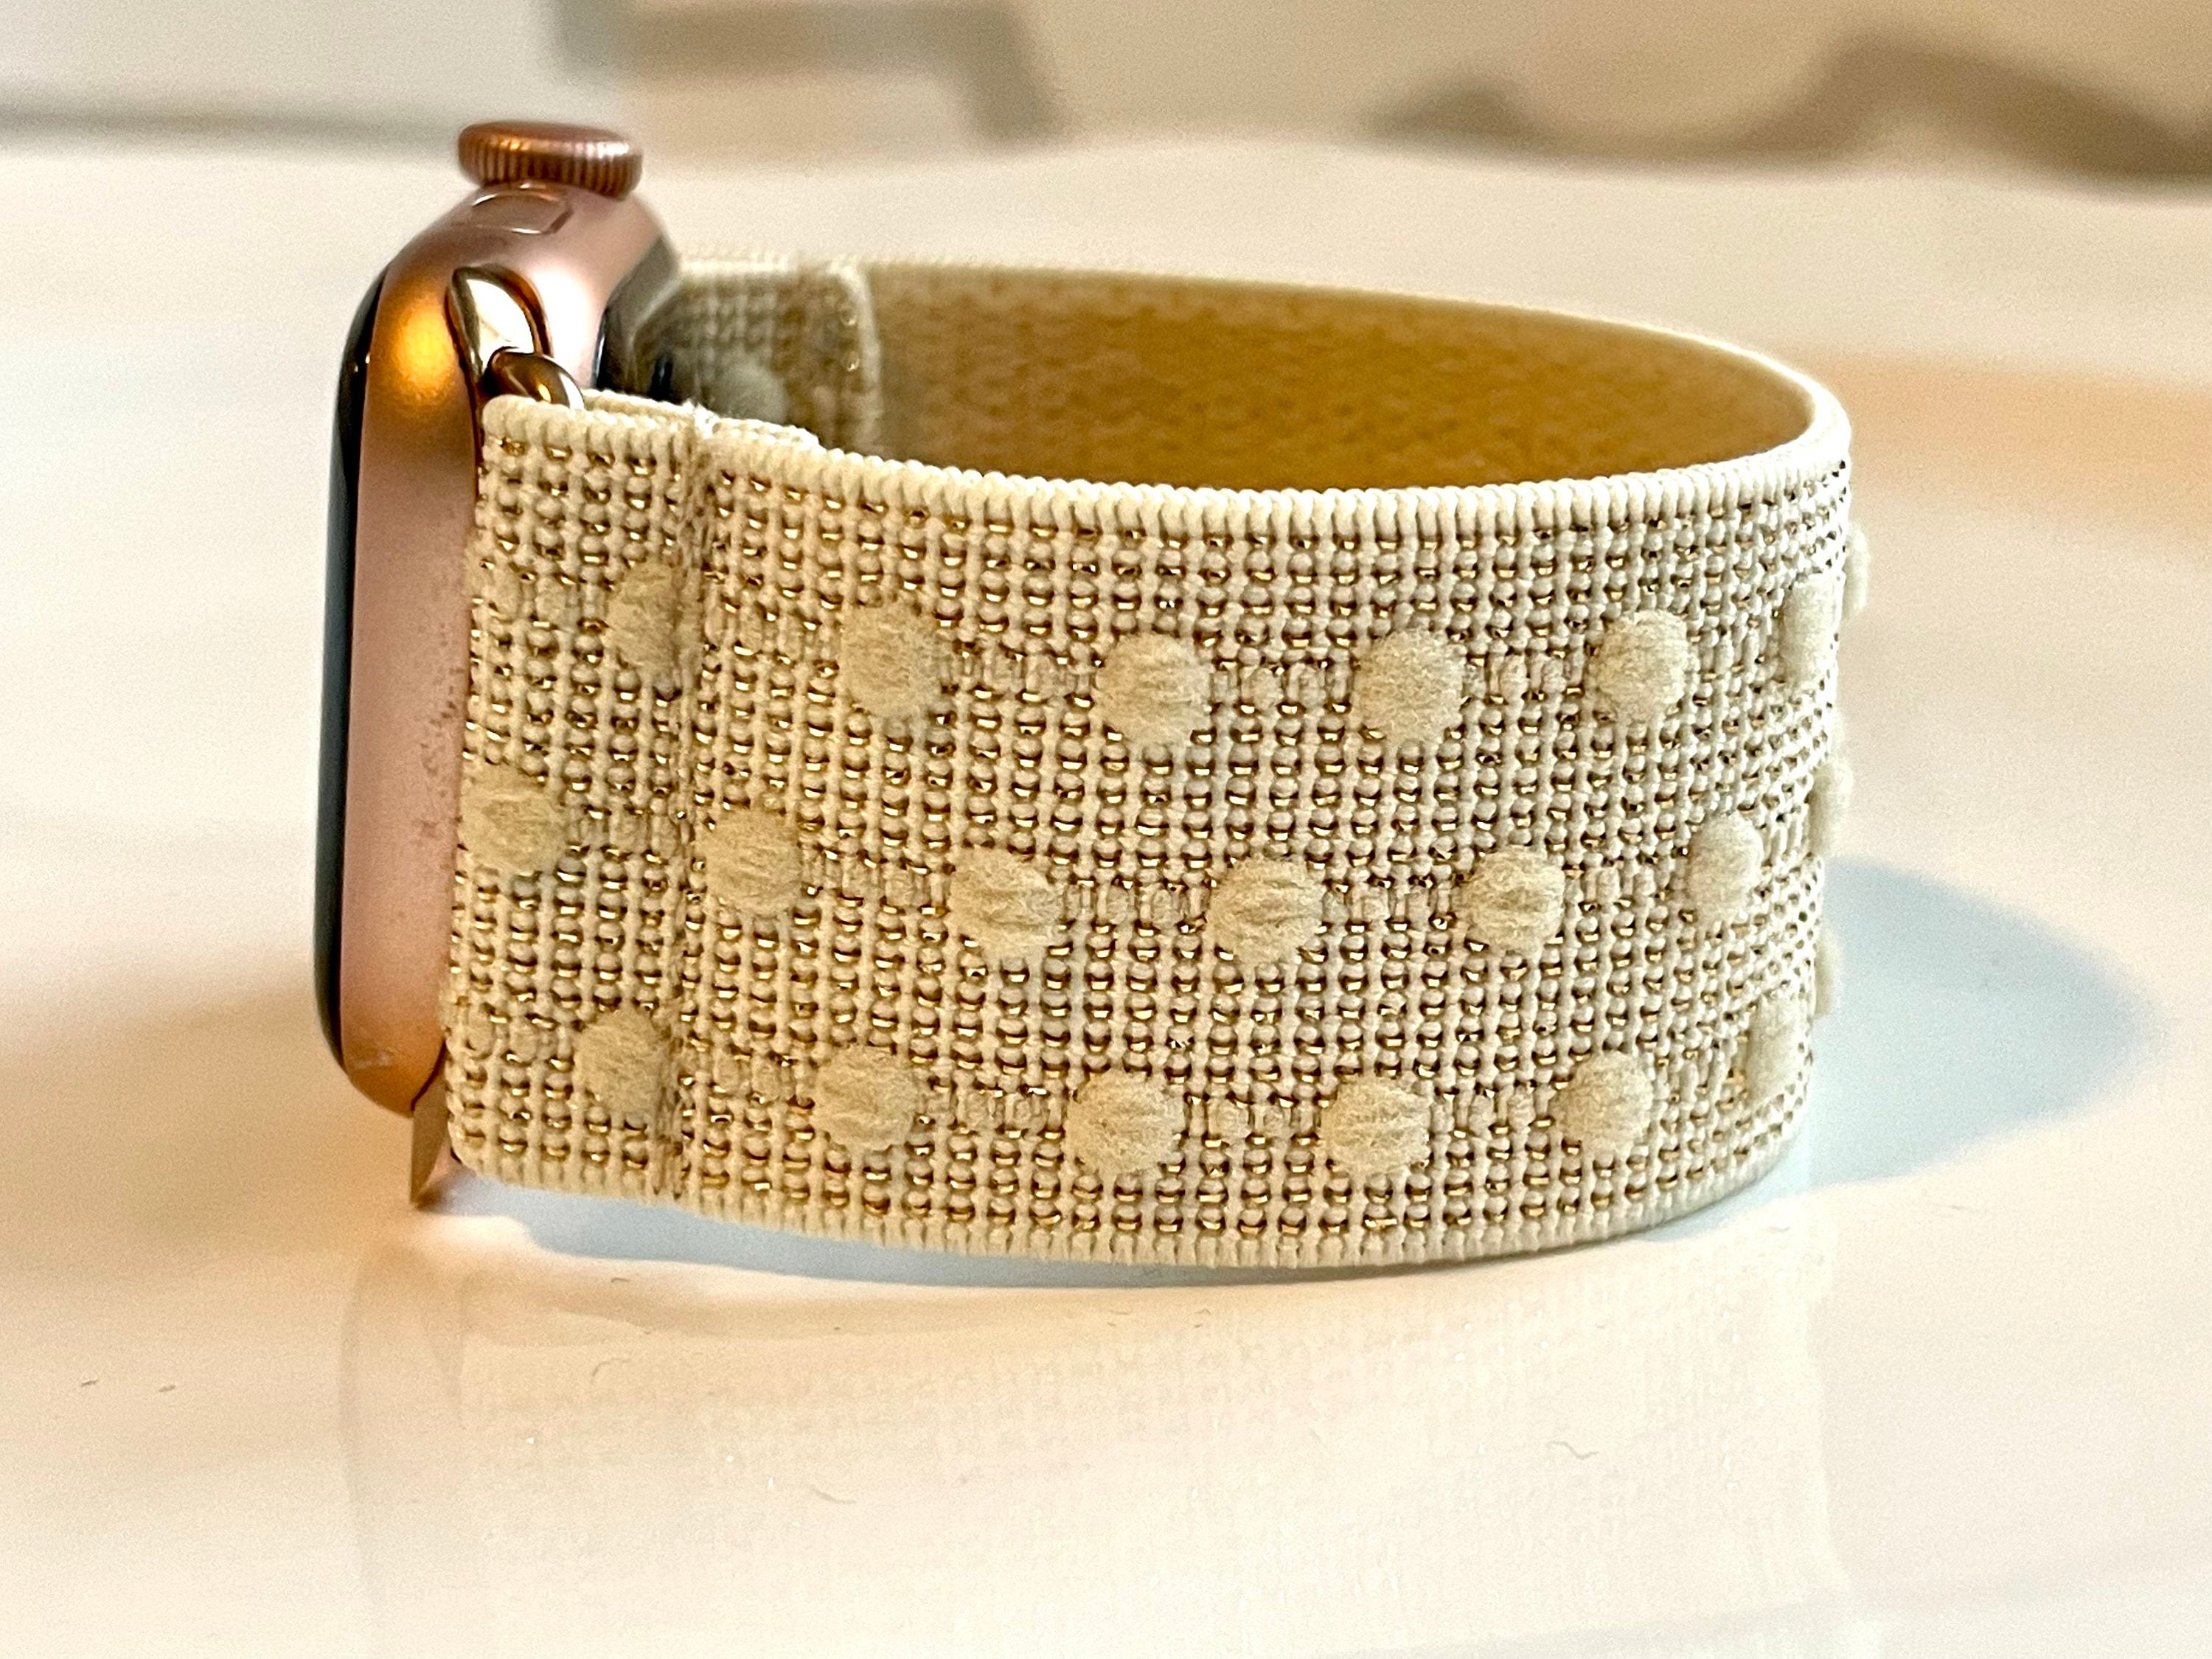 Strap-it Strap-it Bracelet Apple Watch nylon (blanc)